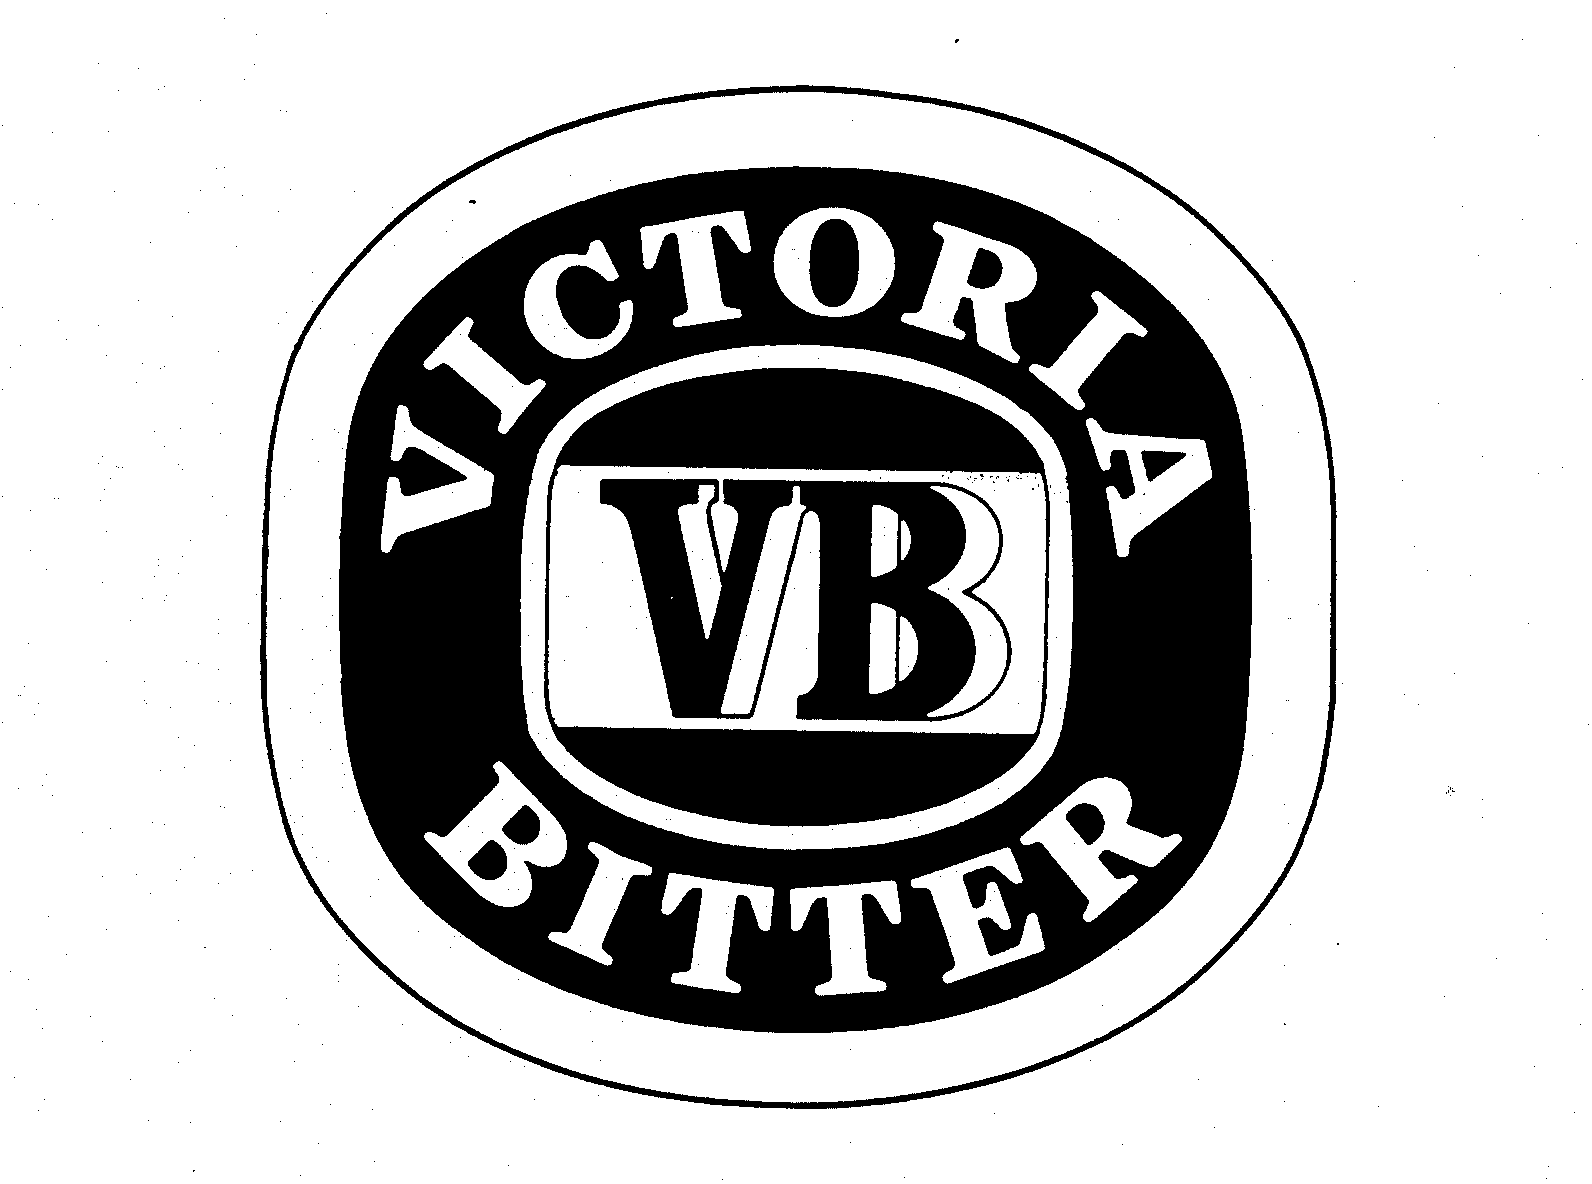  VICTORIA VB BITTER